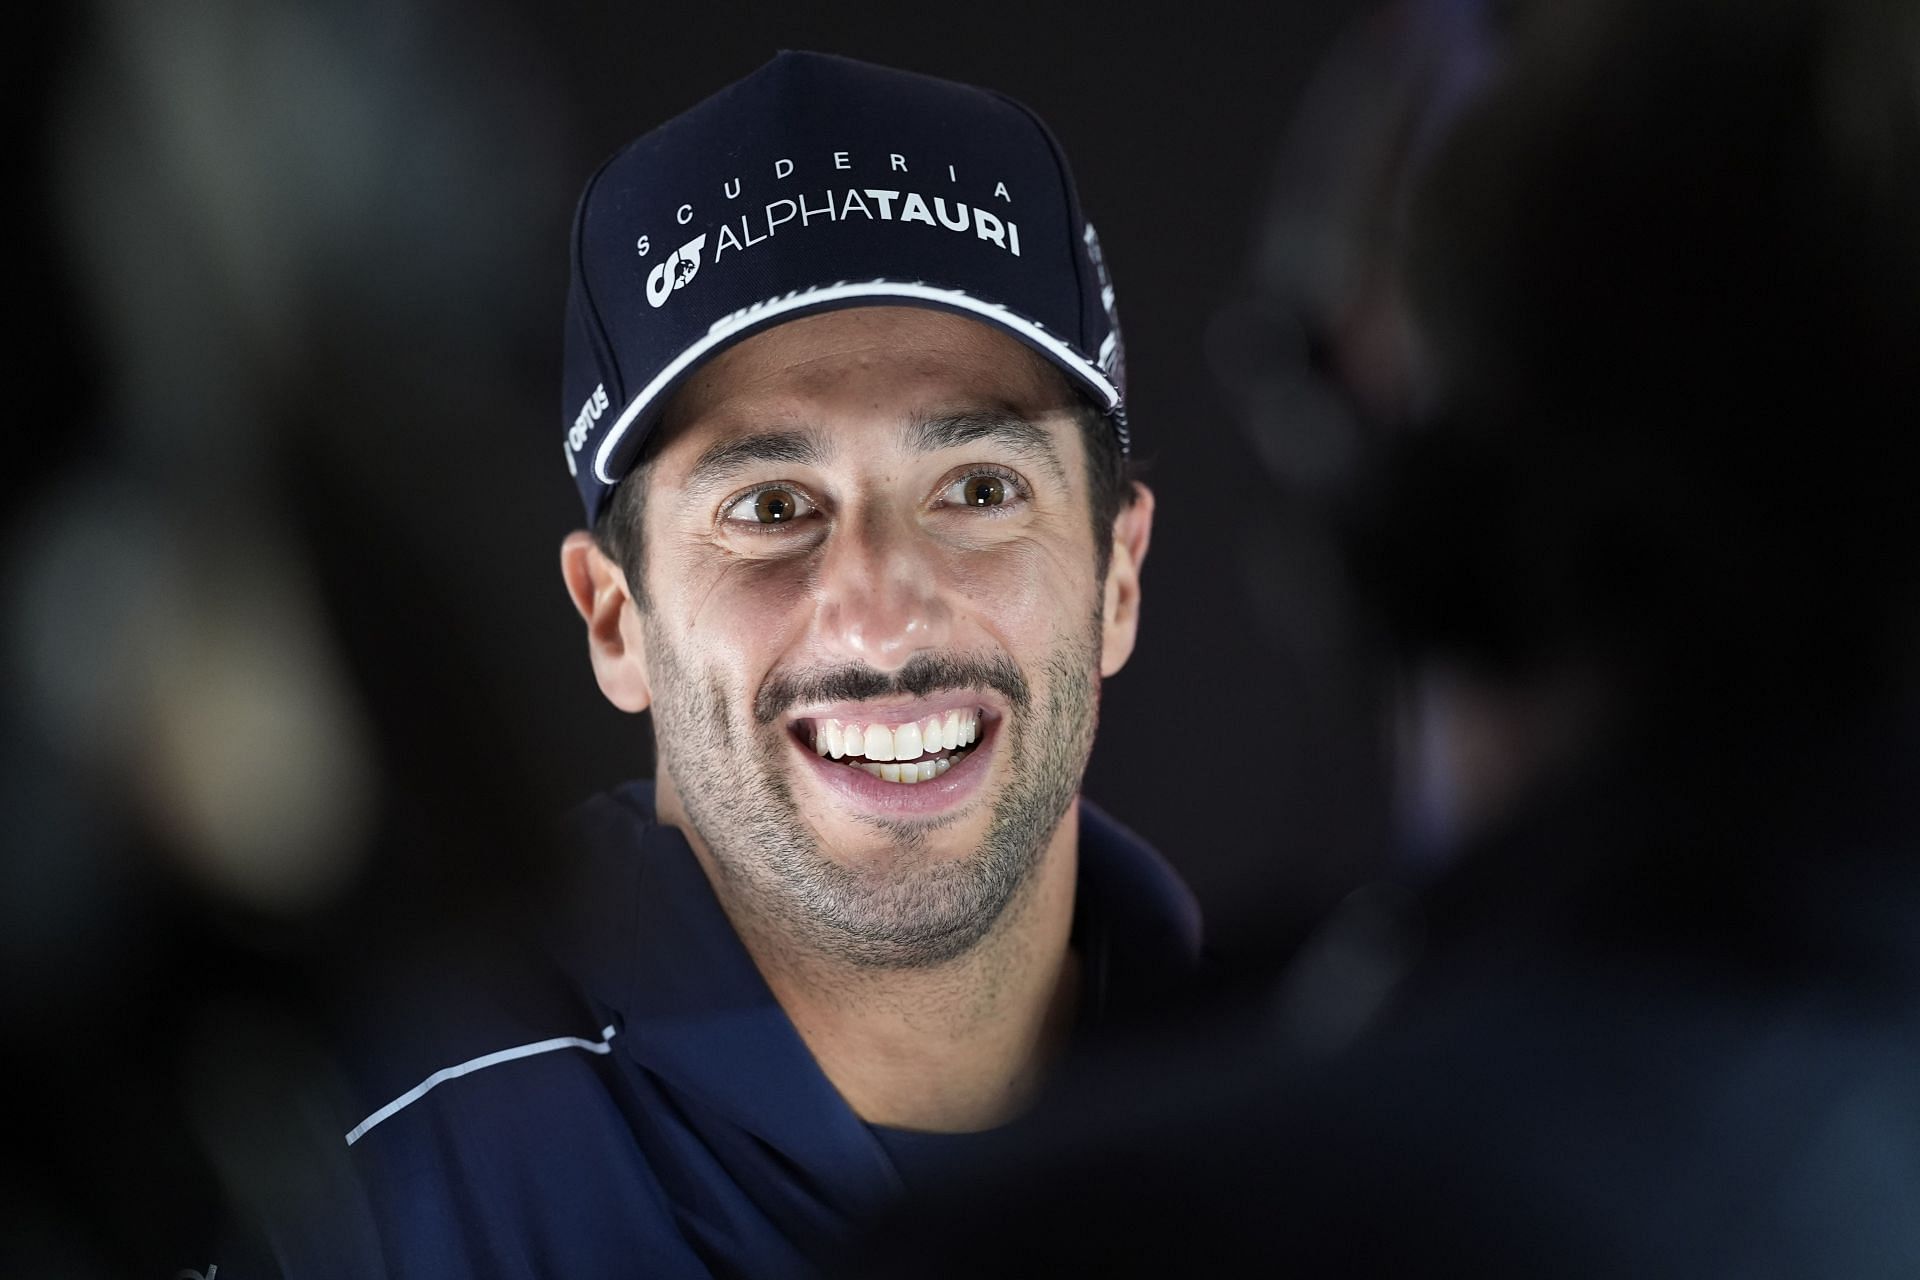 “I’ve had worse weekends”: Daniel Ricciardo does not feel media duties ...